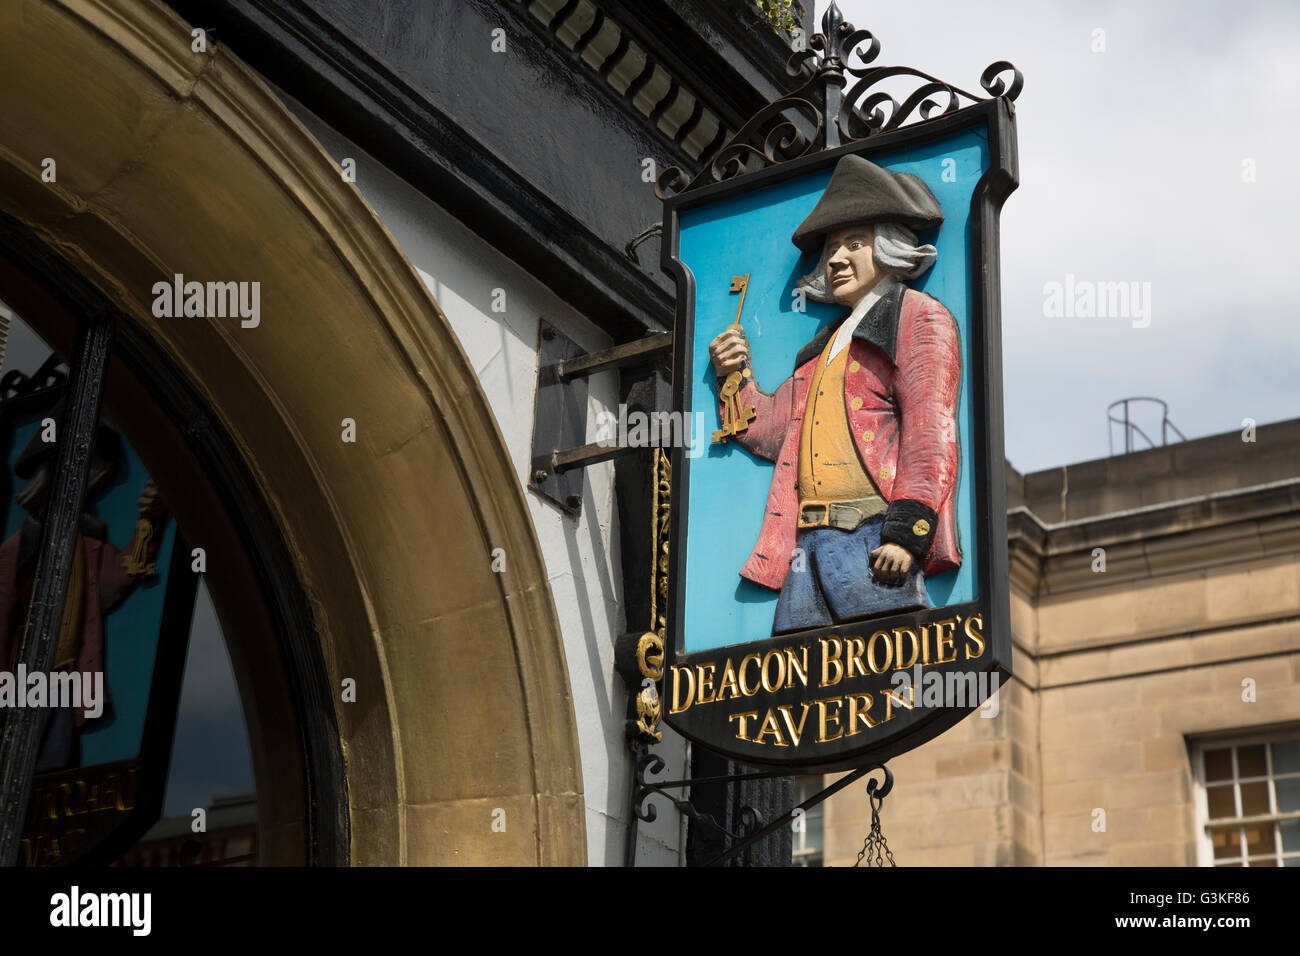 Deacon Brodies Tavern, Pub and Bar Sign; Edinburgh; Scotland; Europe Stock Photo